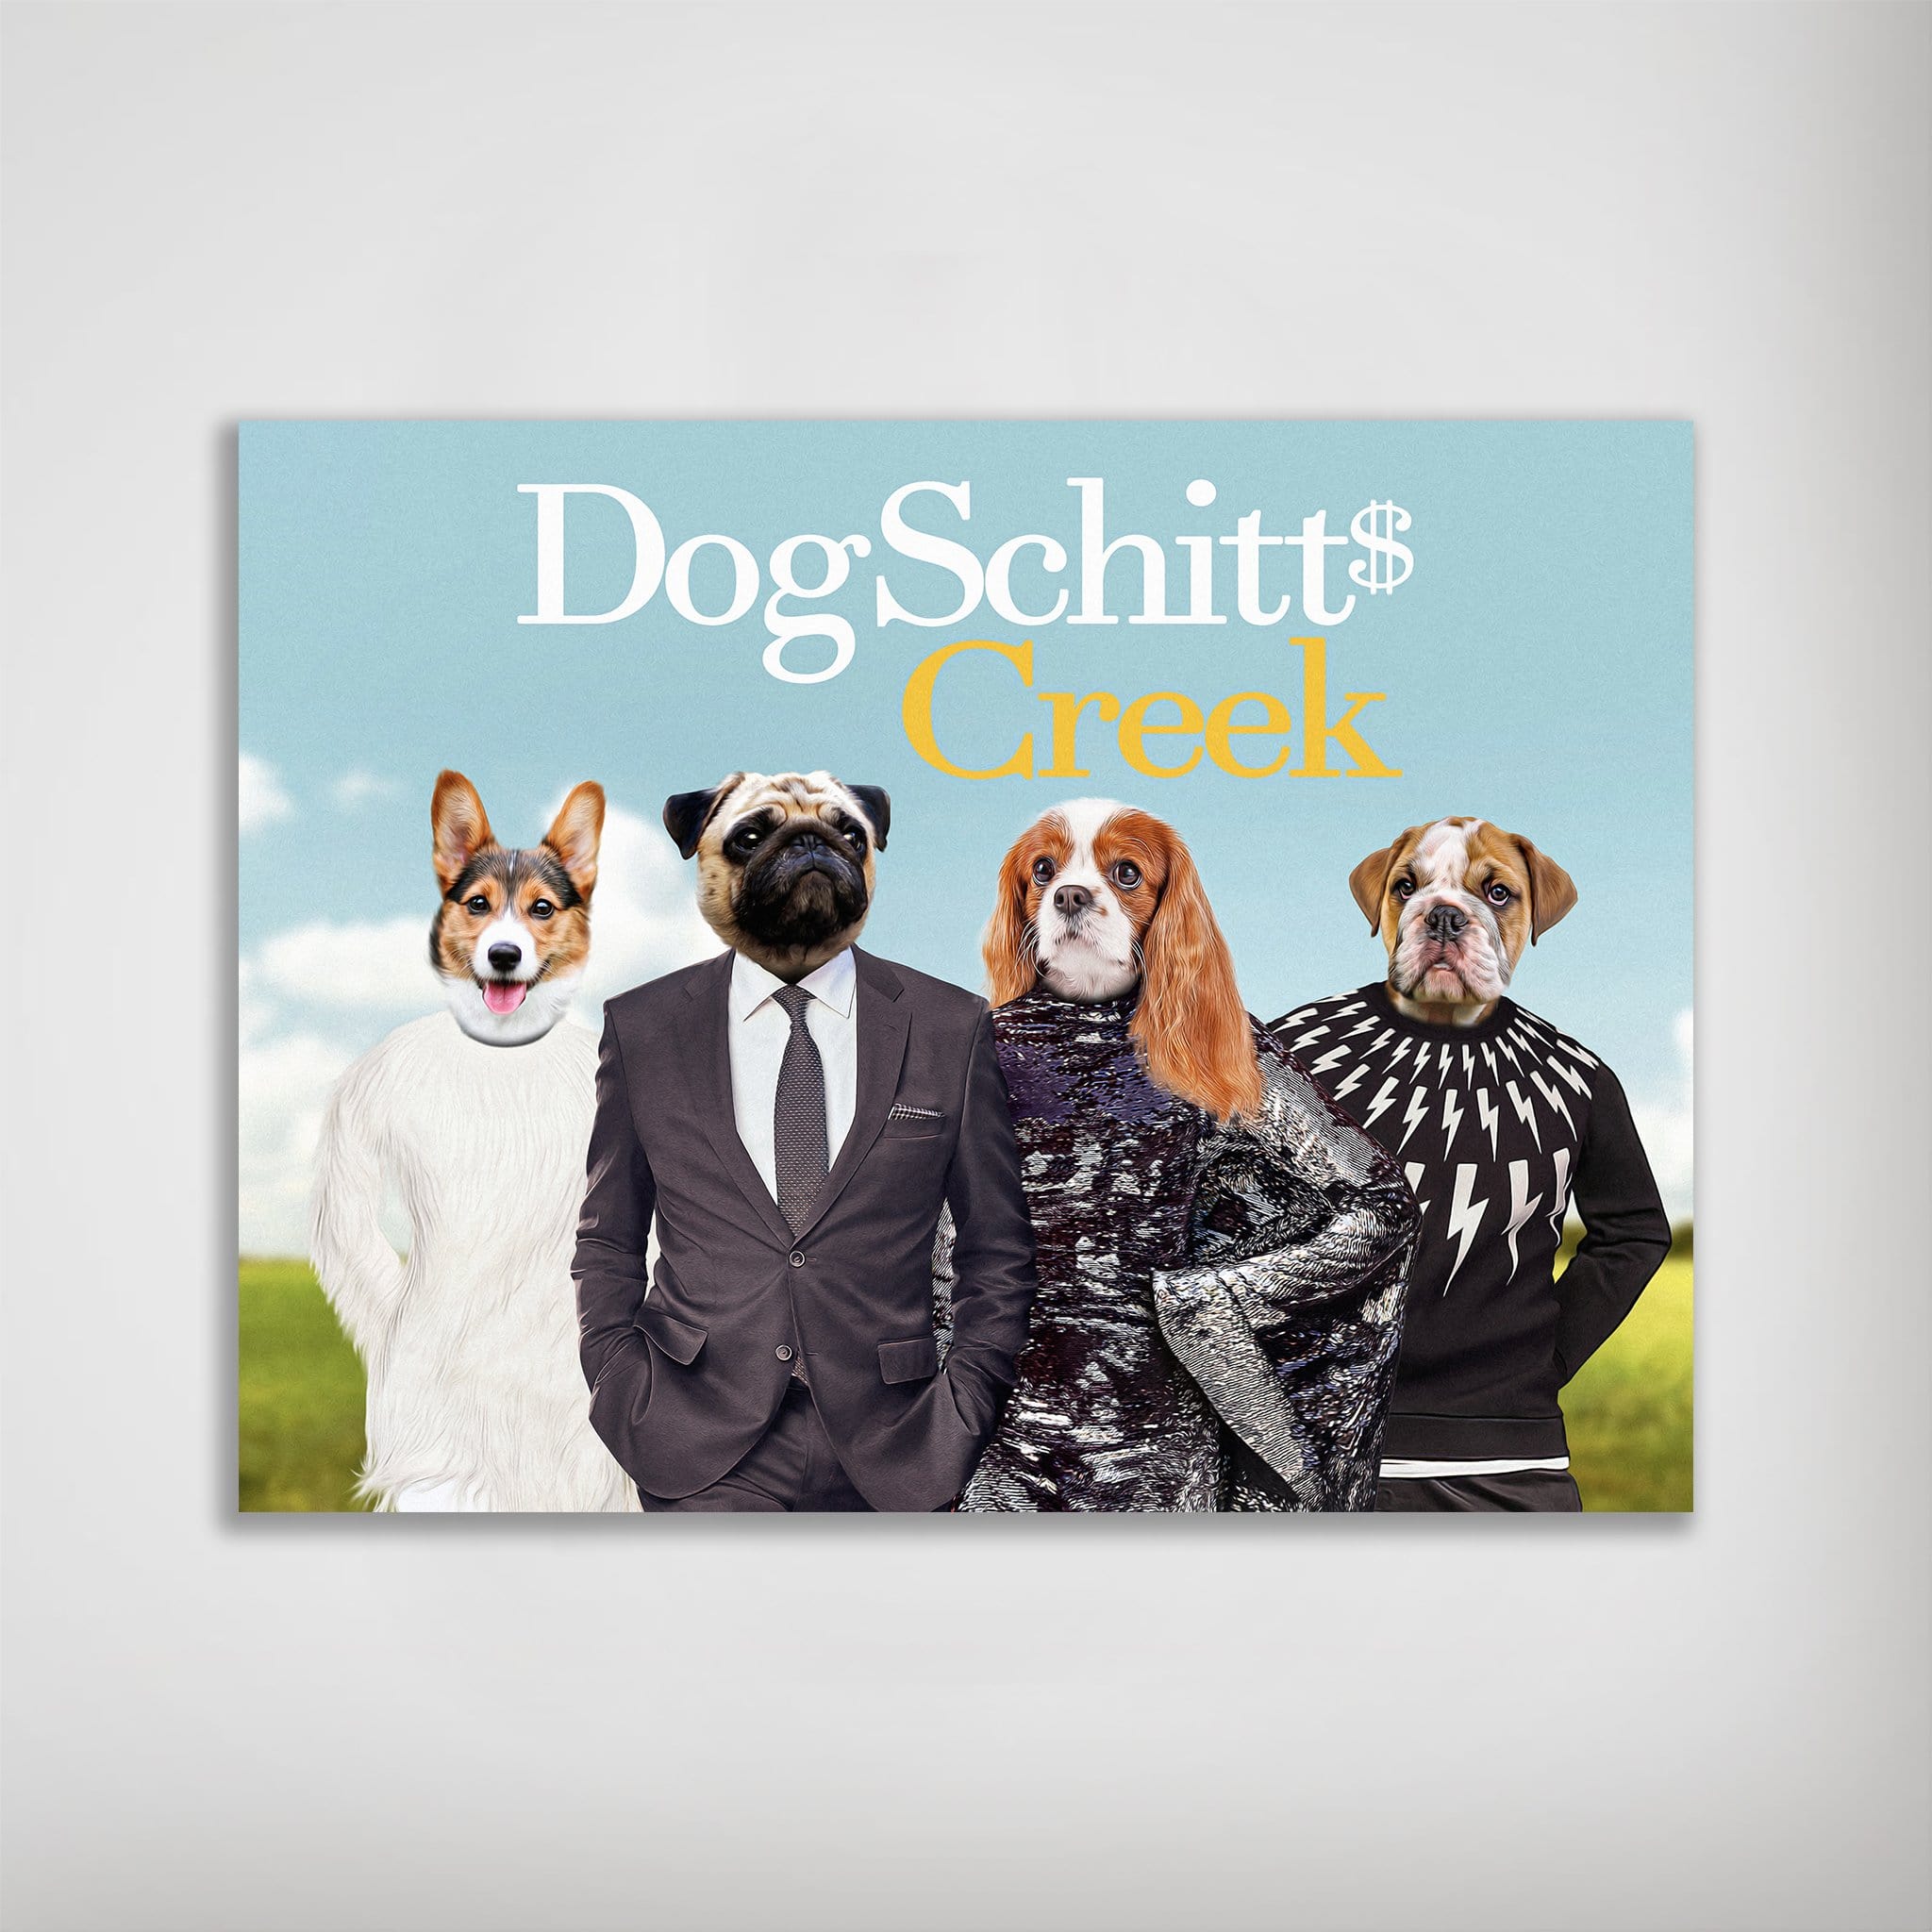 &#39;DogSchitt&#39;s Creek&#39; Personalized 4 Pet Poster